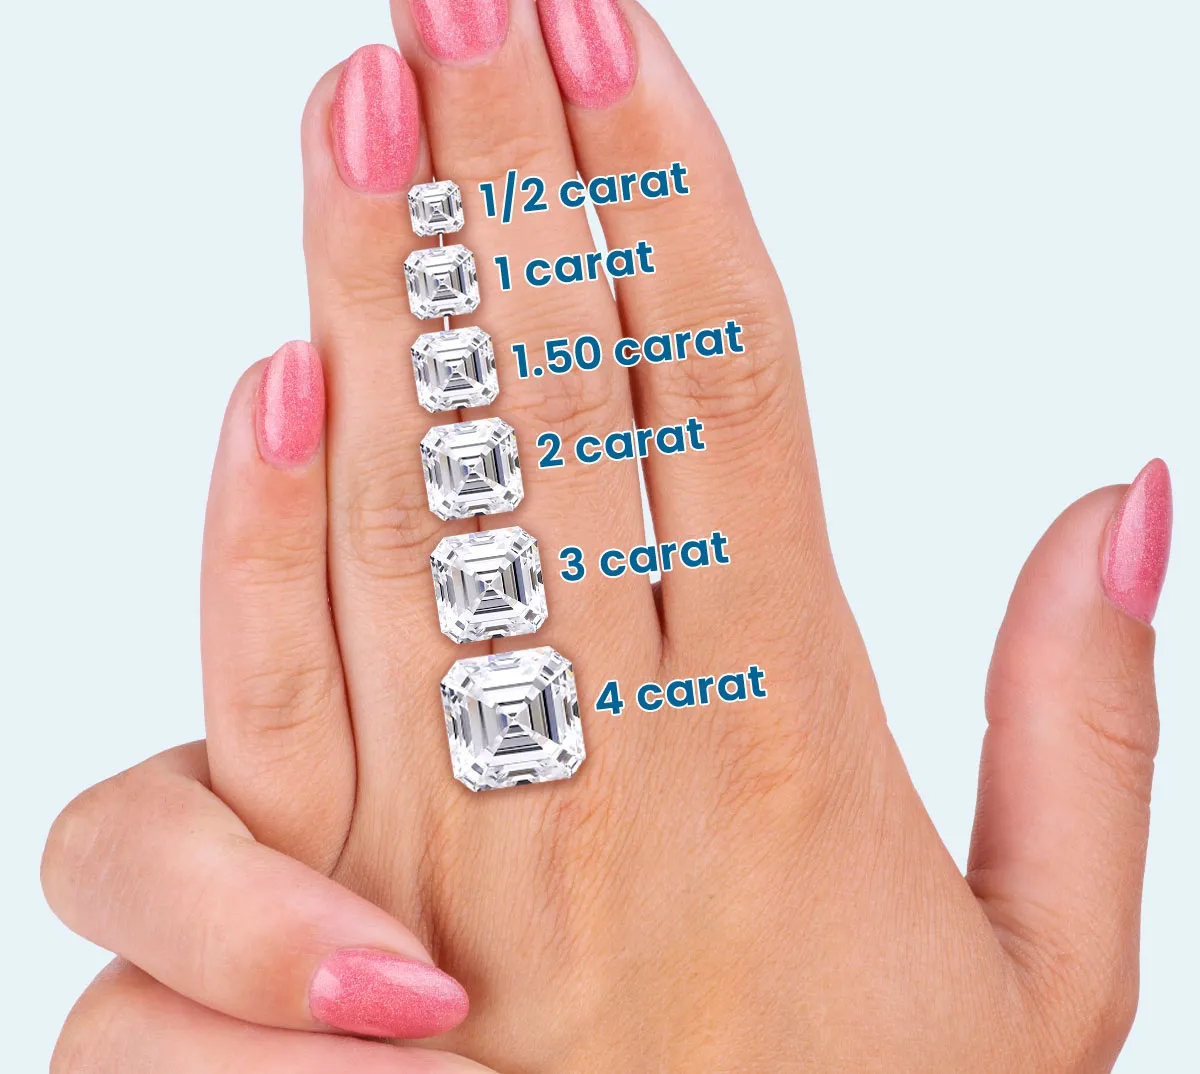 Popular Wedding Ring Widths Shown on the Finger